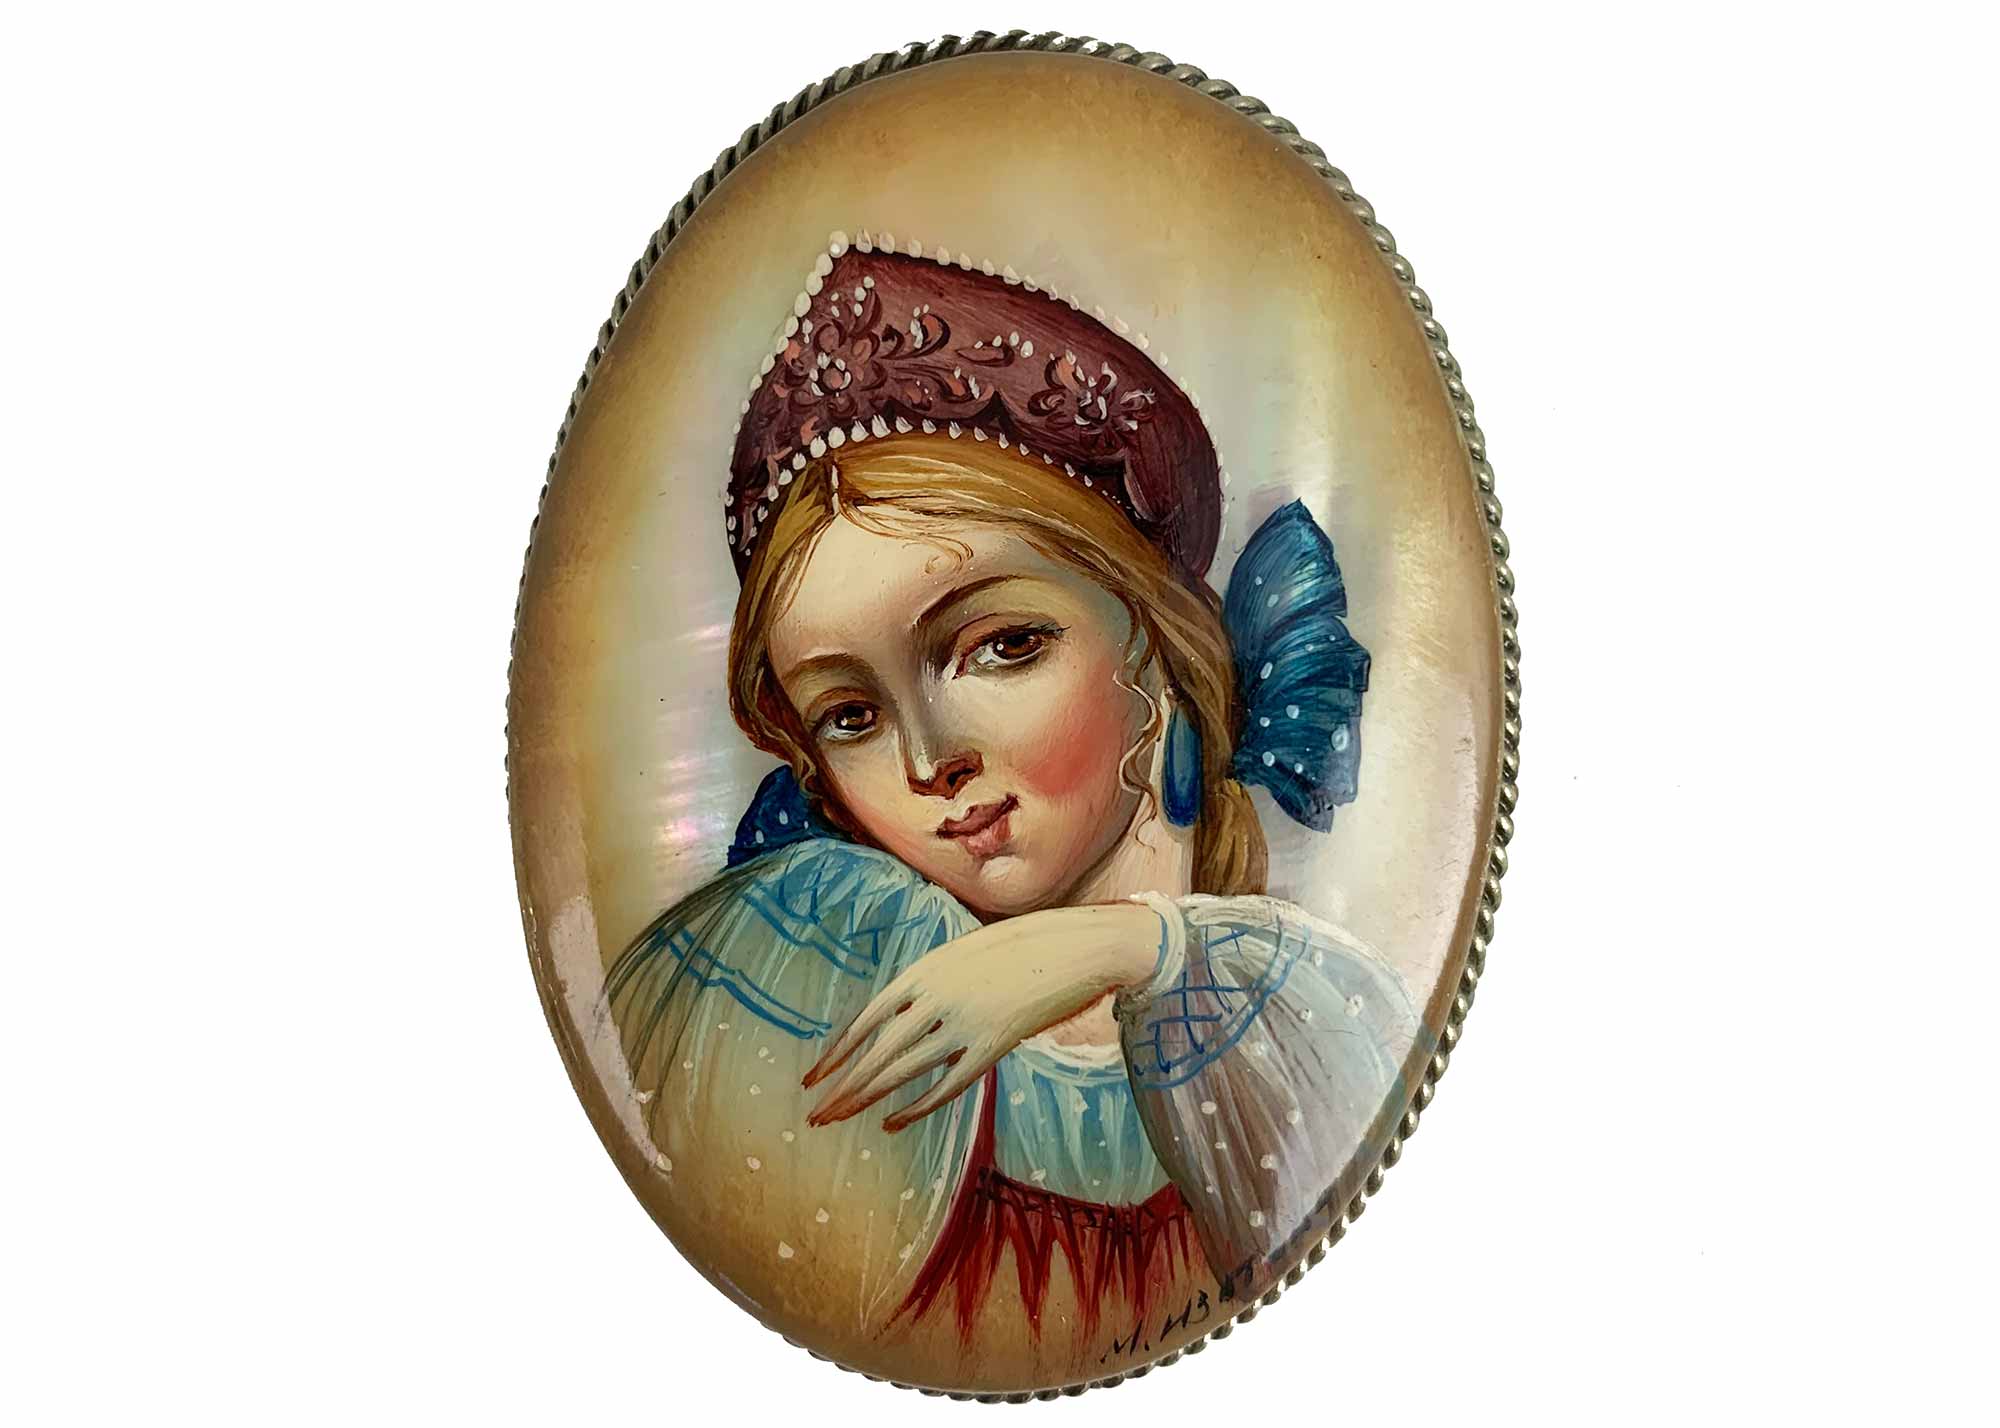 Buy Vintage Mother of Pearl Portrait Brooch Galina at GoldenCockerel.com